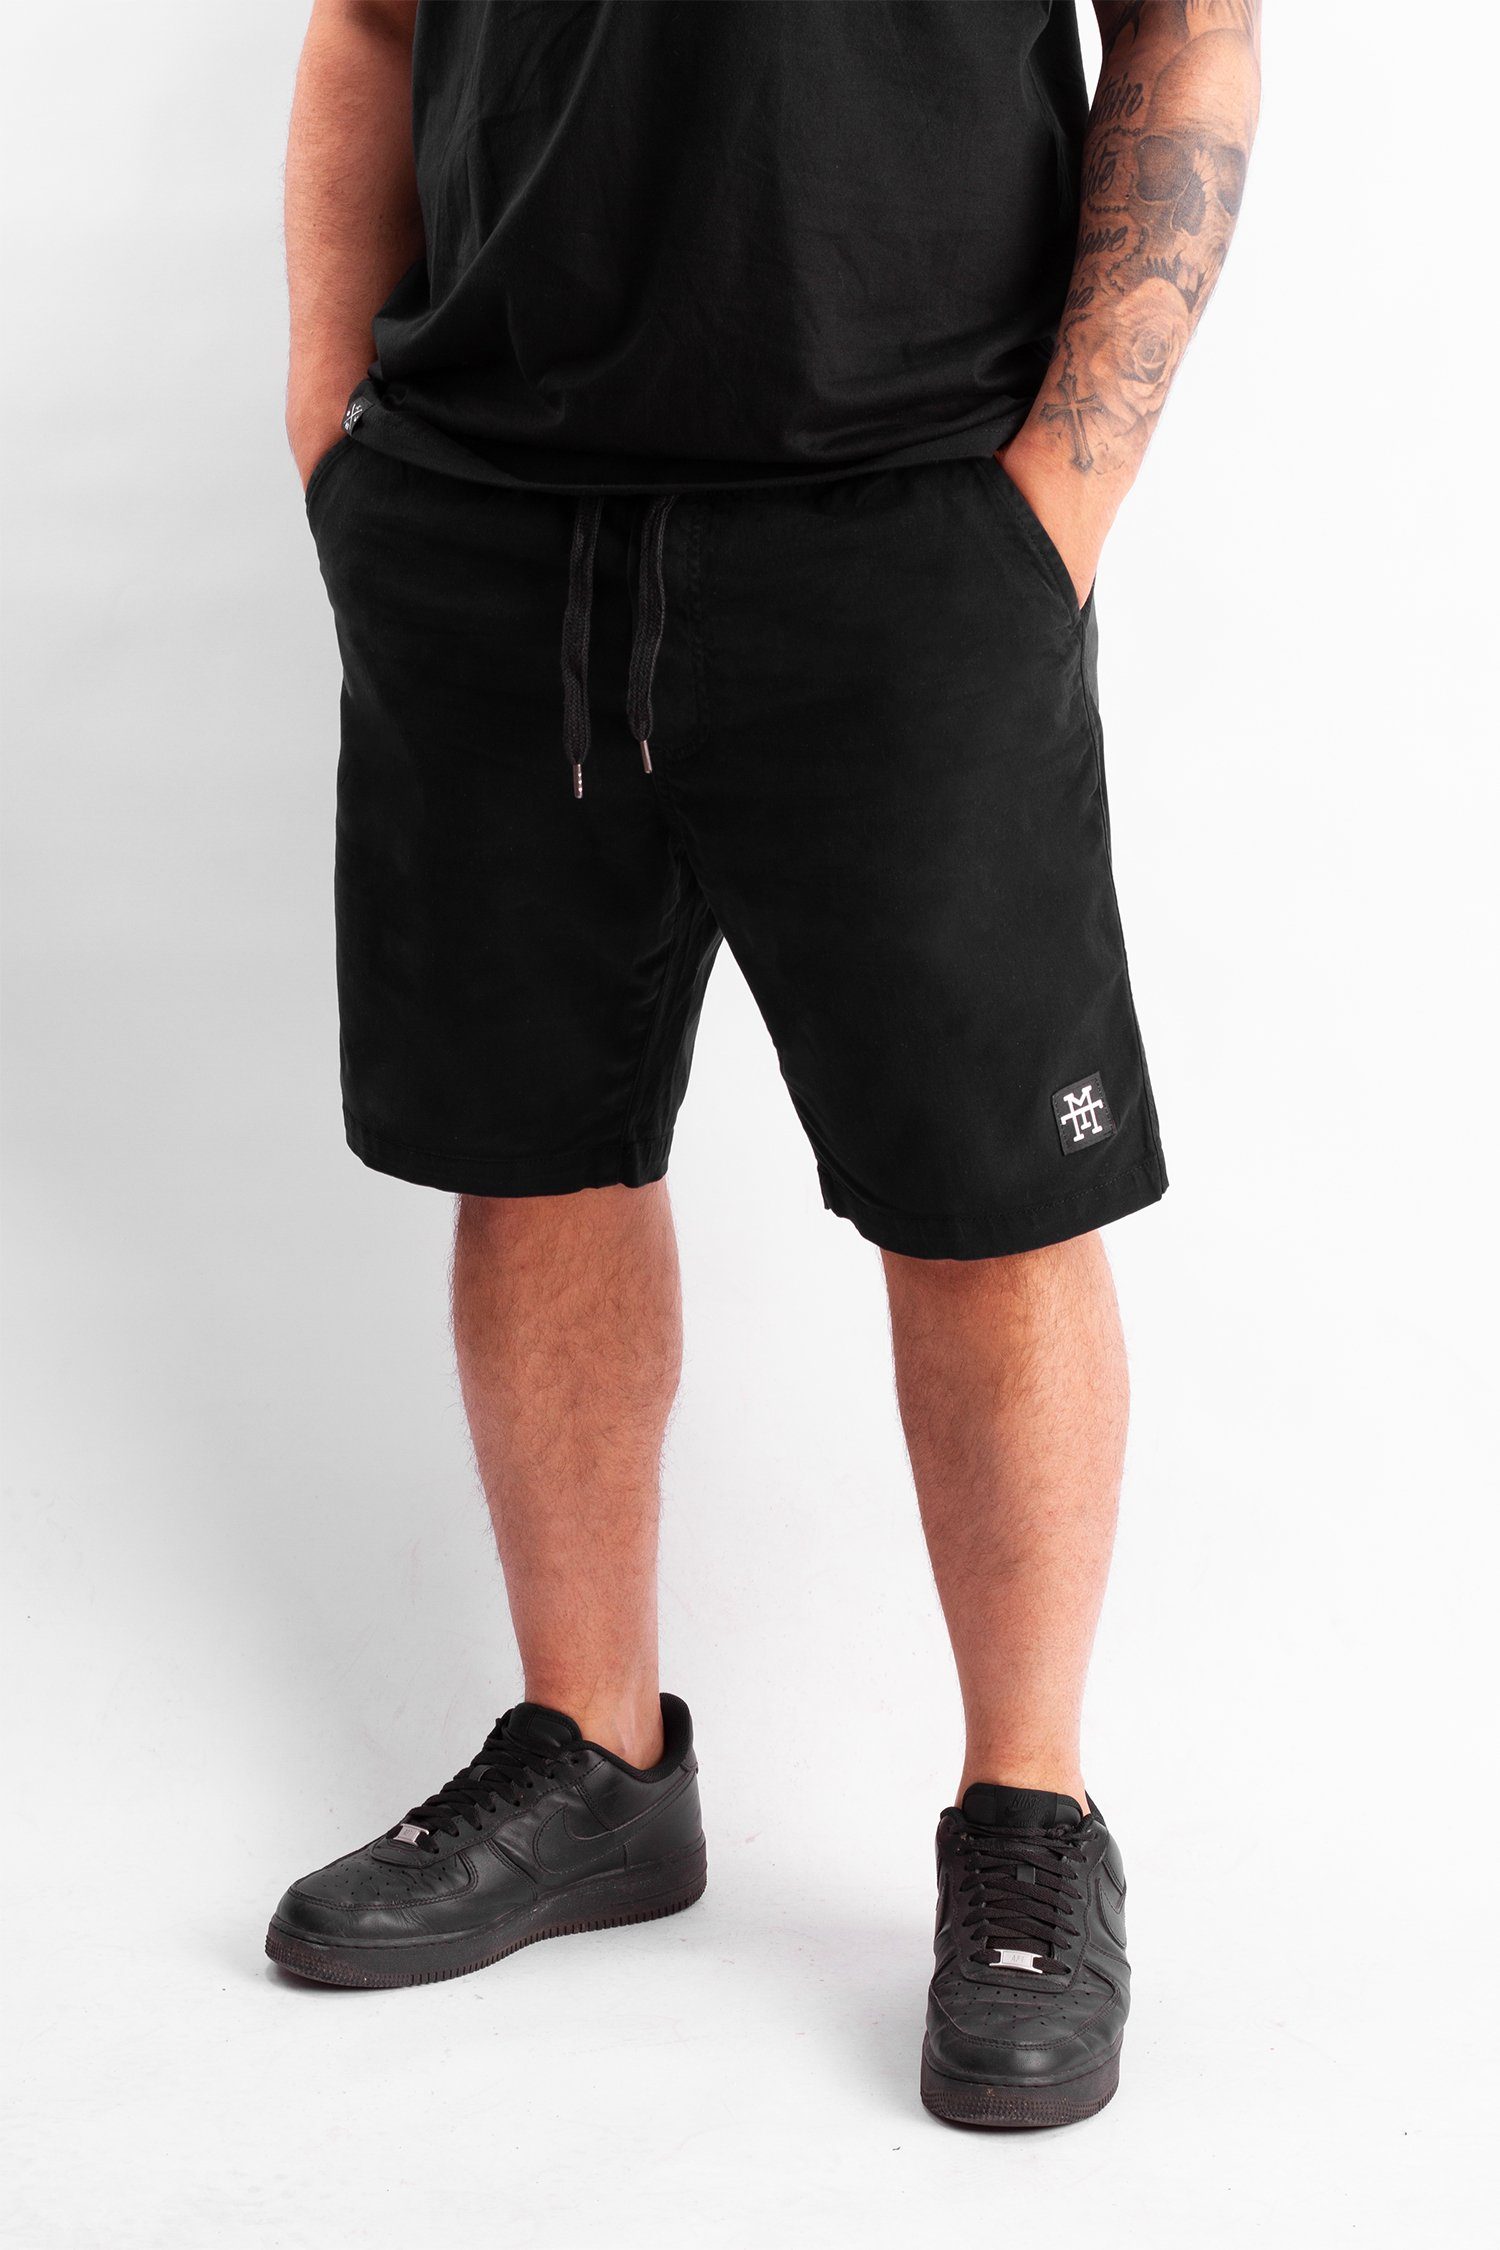 Manufaktur13 - Kurze Black aus Chino Chinoshorts dehnbarem Stretch Shorts mit Twill Hose Kordelzug / Tunnelzug